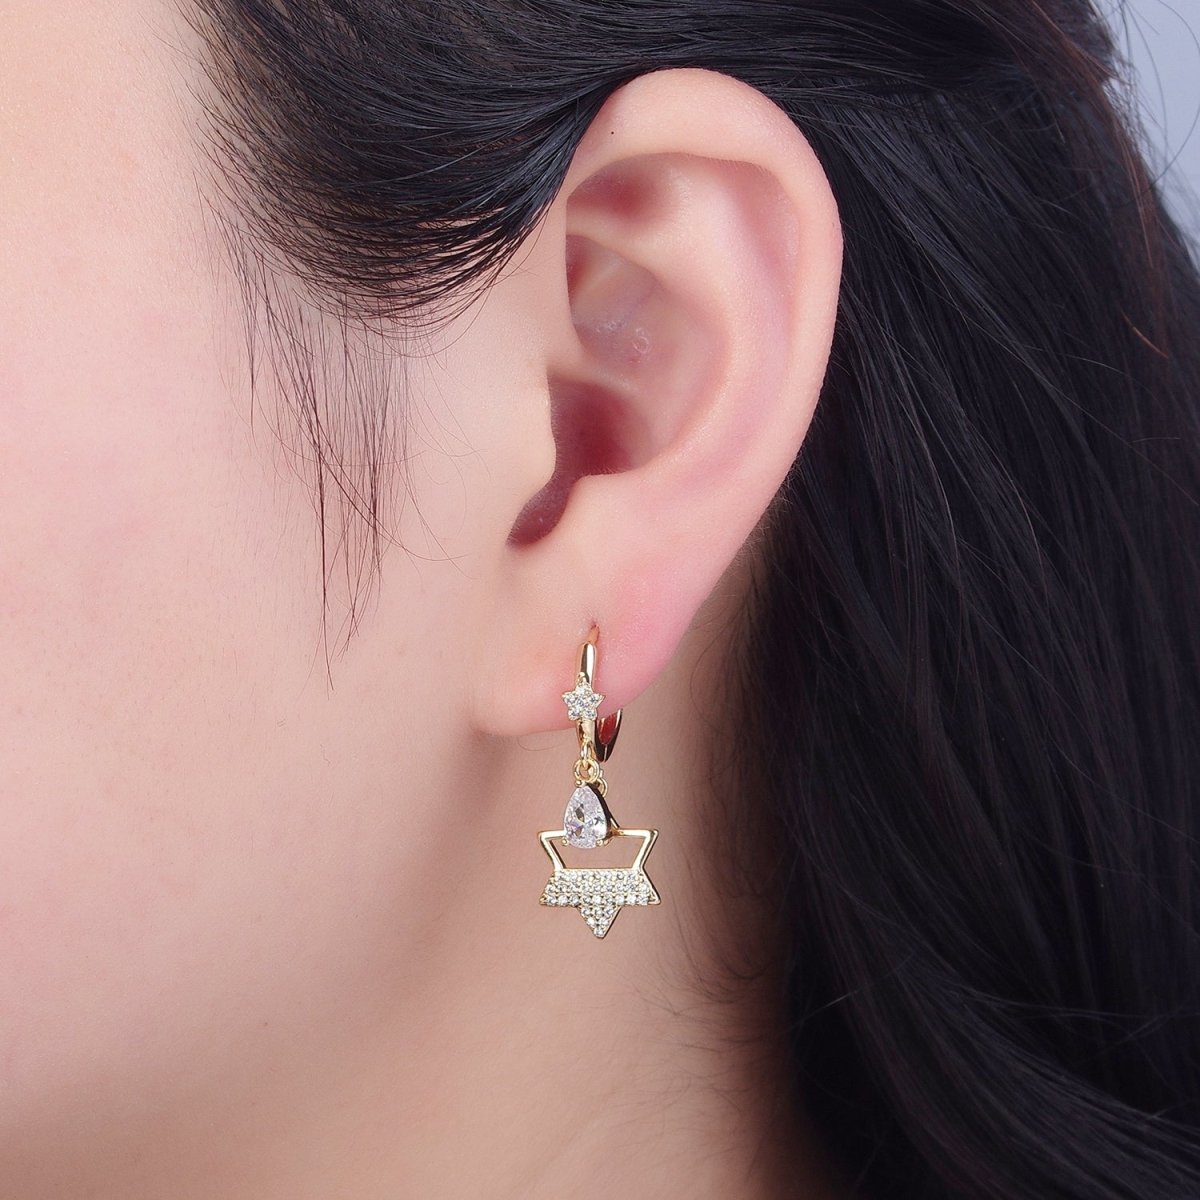 Dainty Huggie Earring with Star Charm and Tear Drop CZ Stone V-433 - DLUXCA